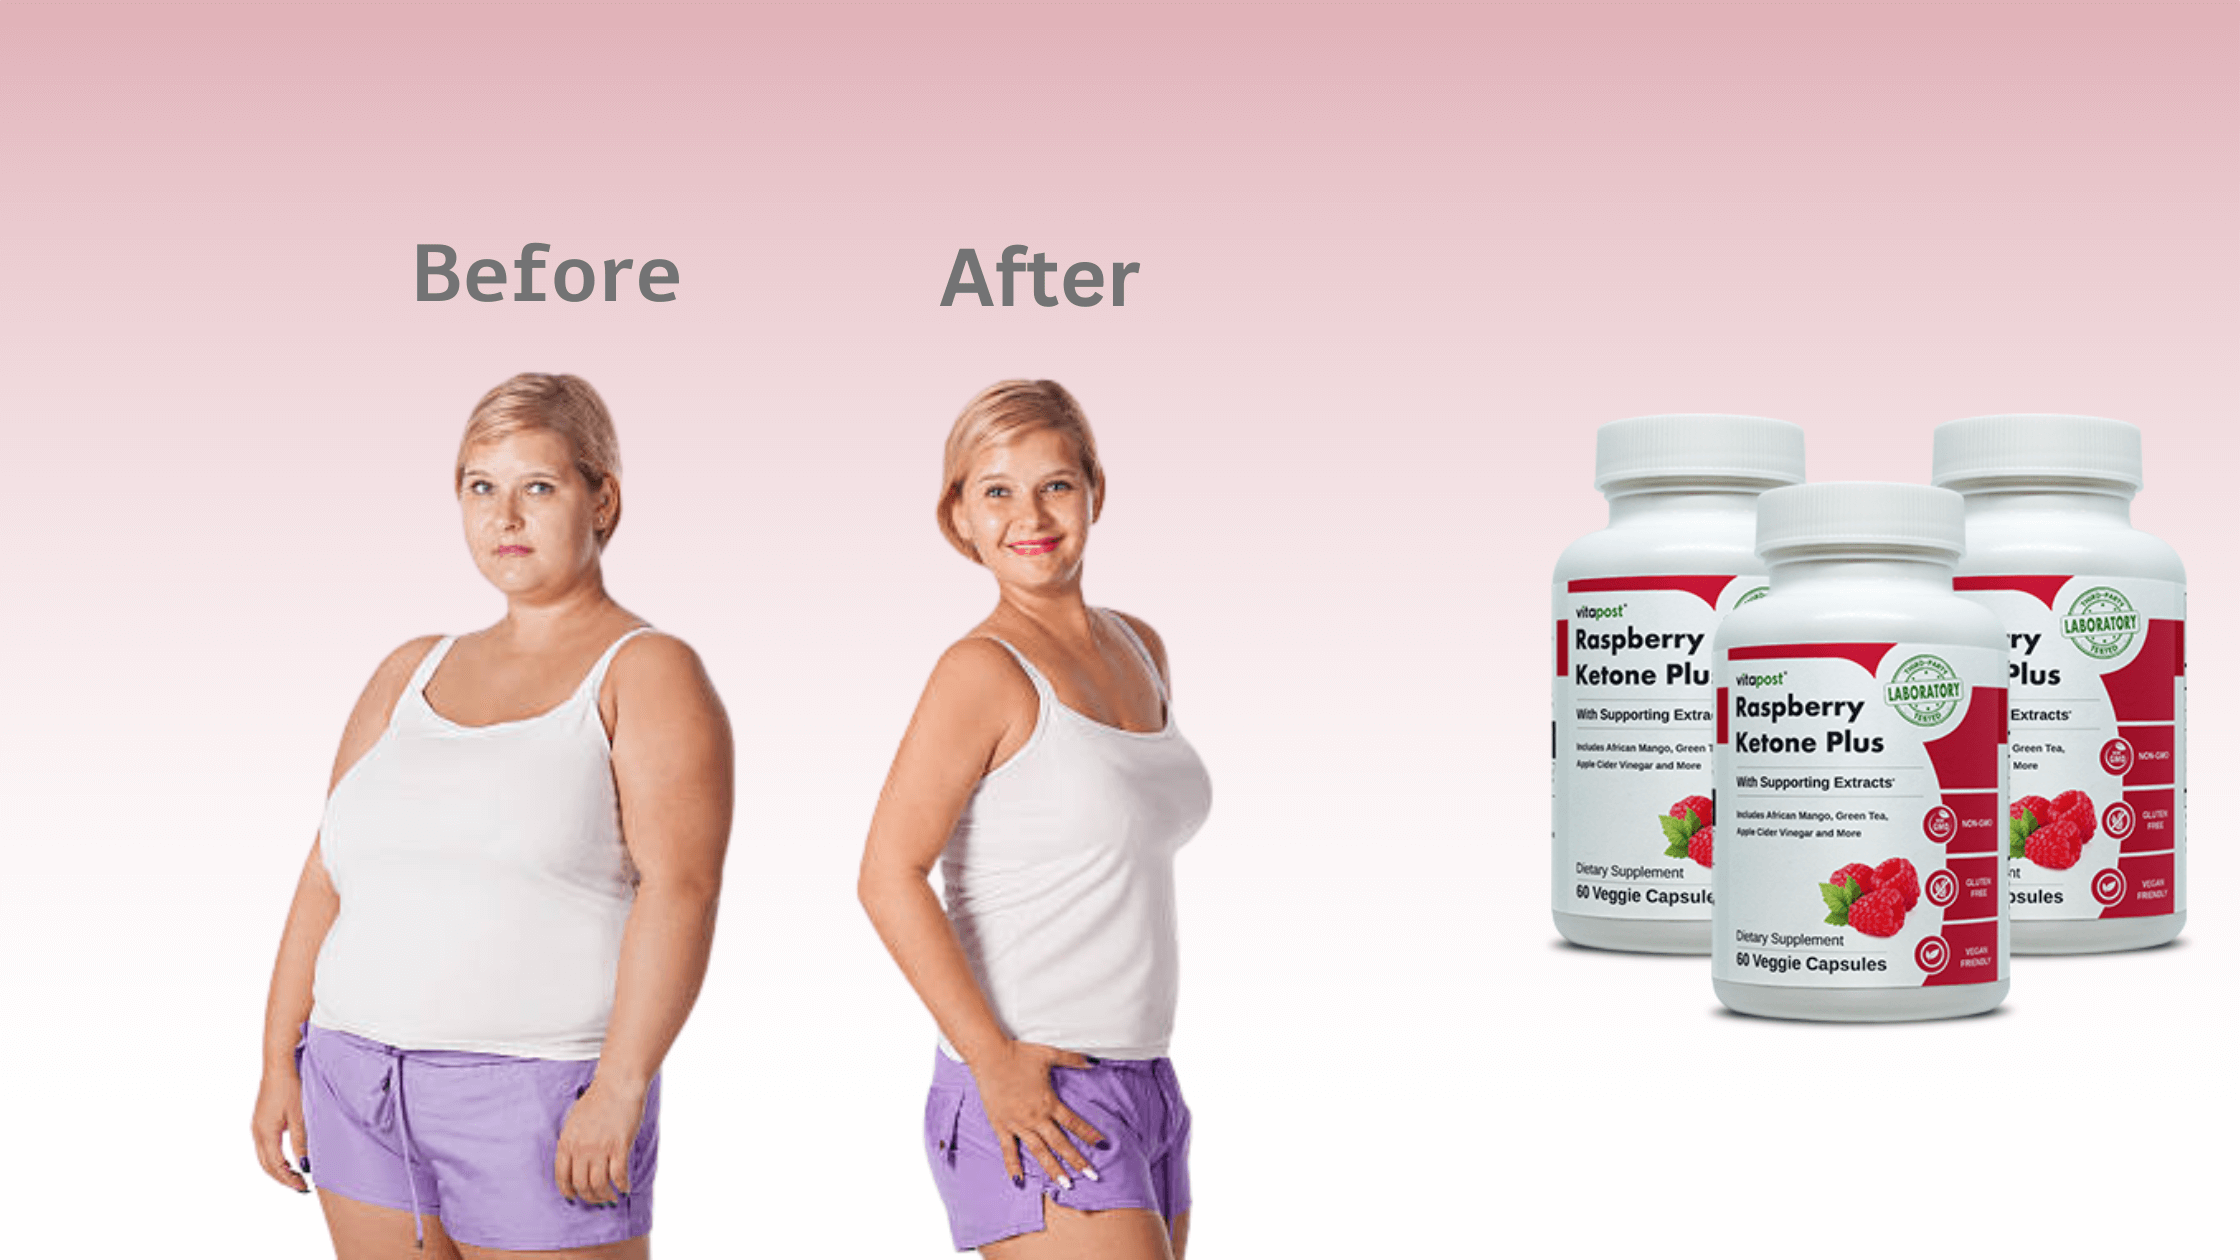 Raspberry Ketone Plus Benefits